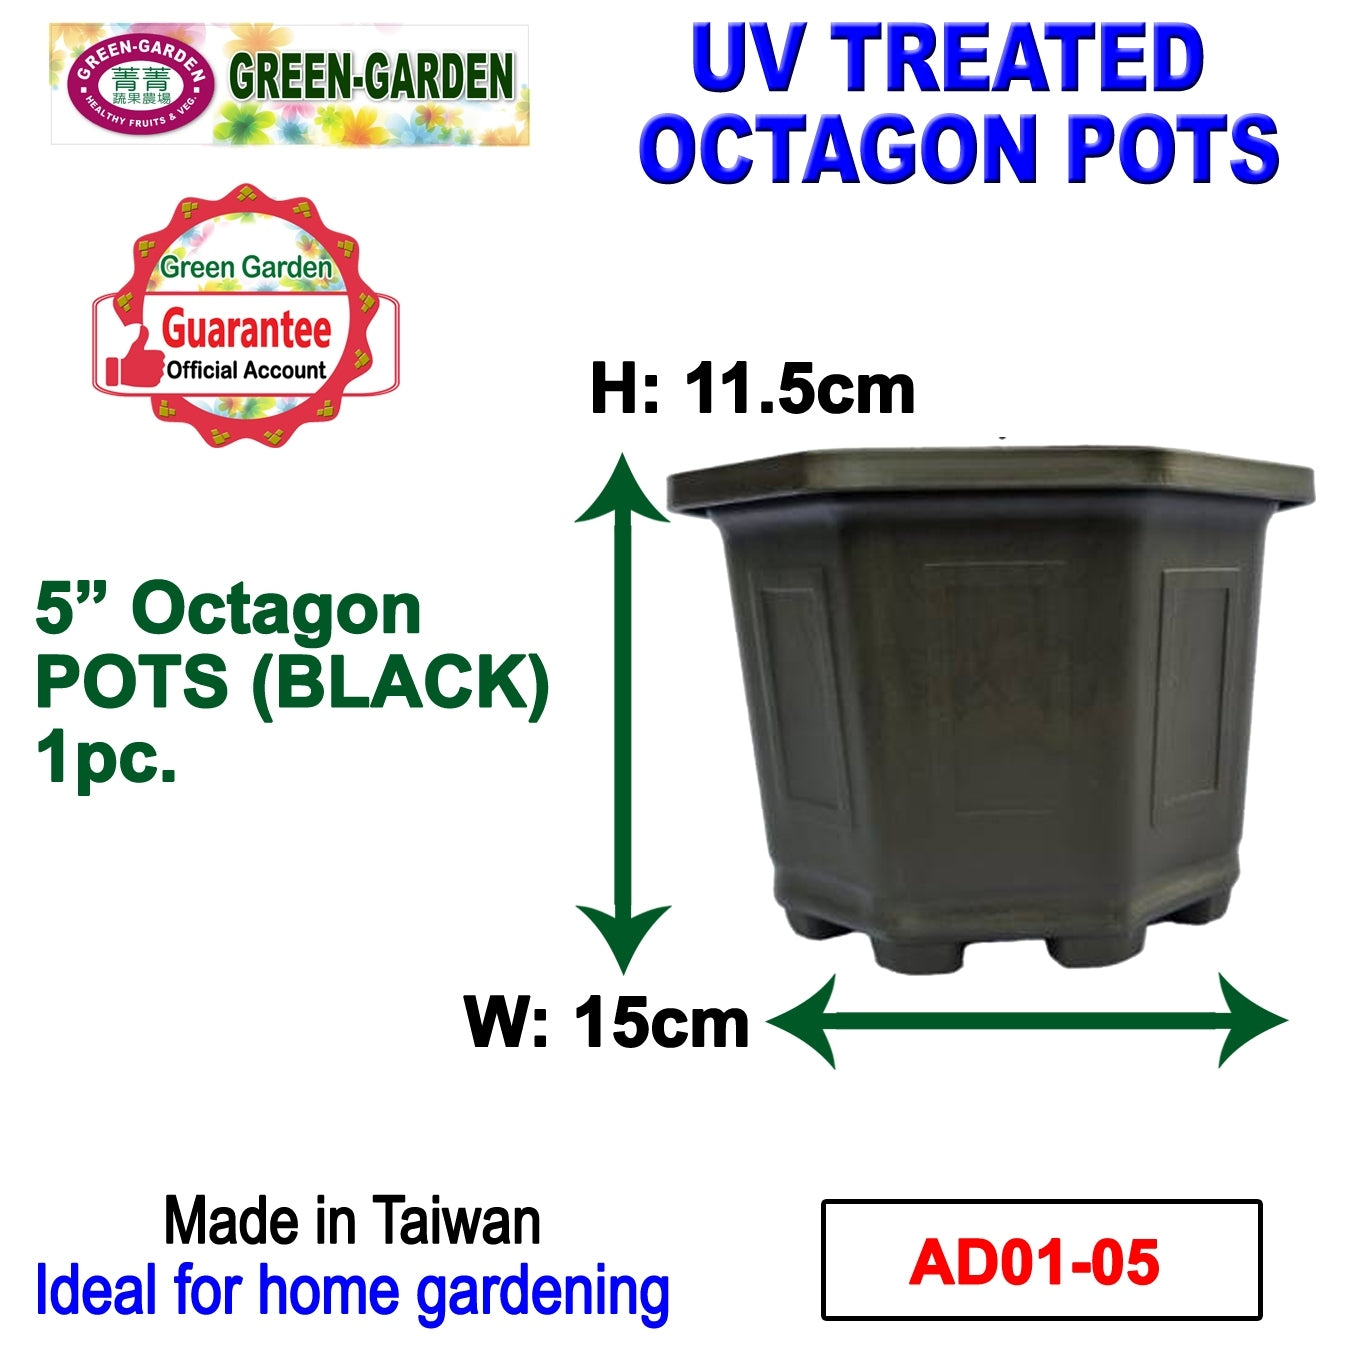 UV TREATED Octagonal Pot 5"